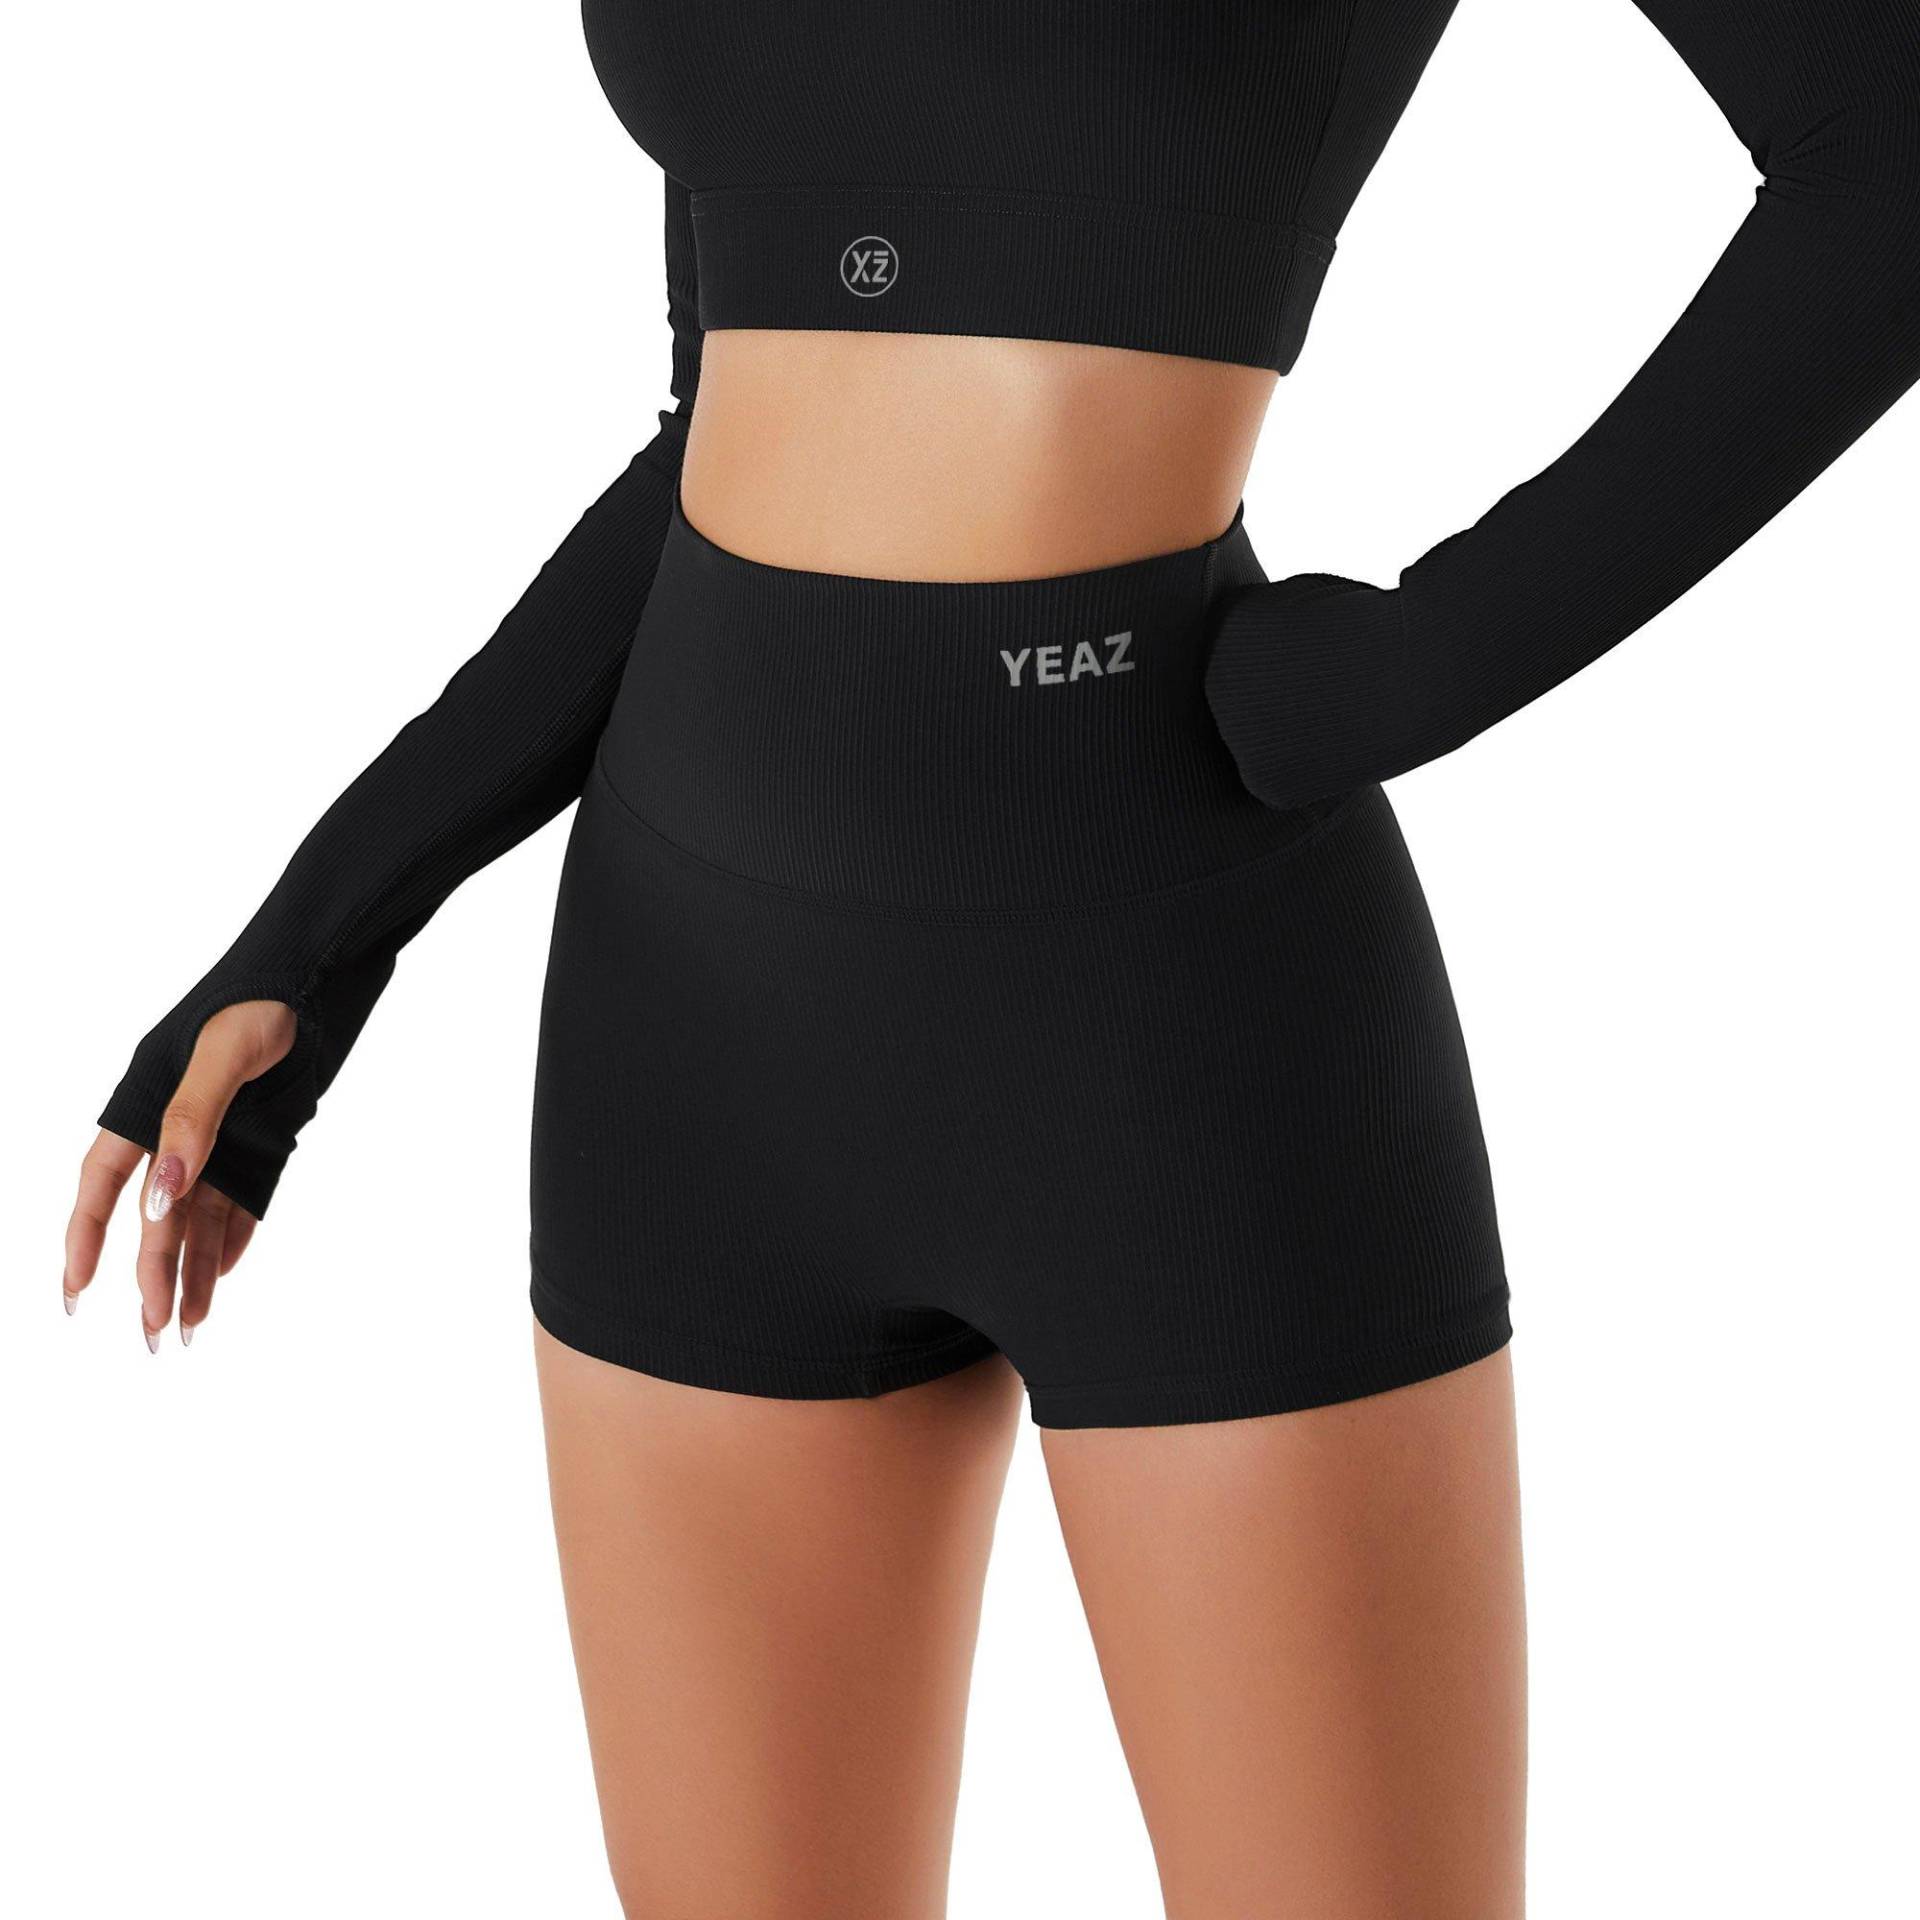 Club Level Shape Shorts - Black Magic Damen Schwarz XL von YEAZ